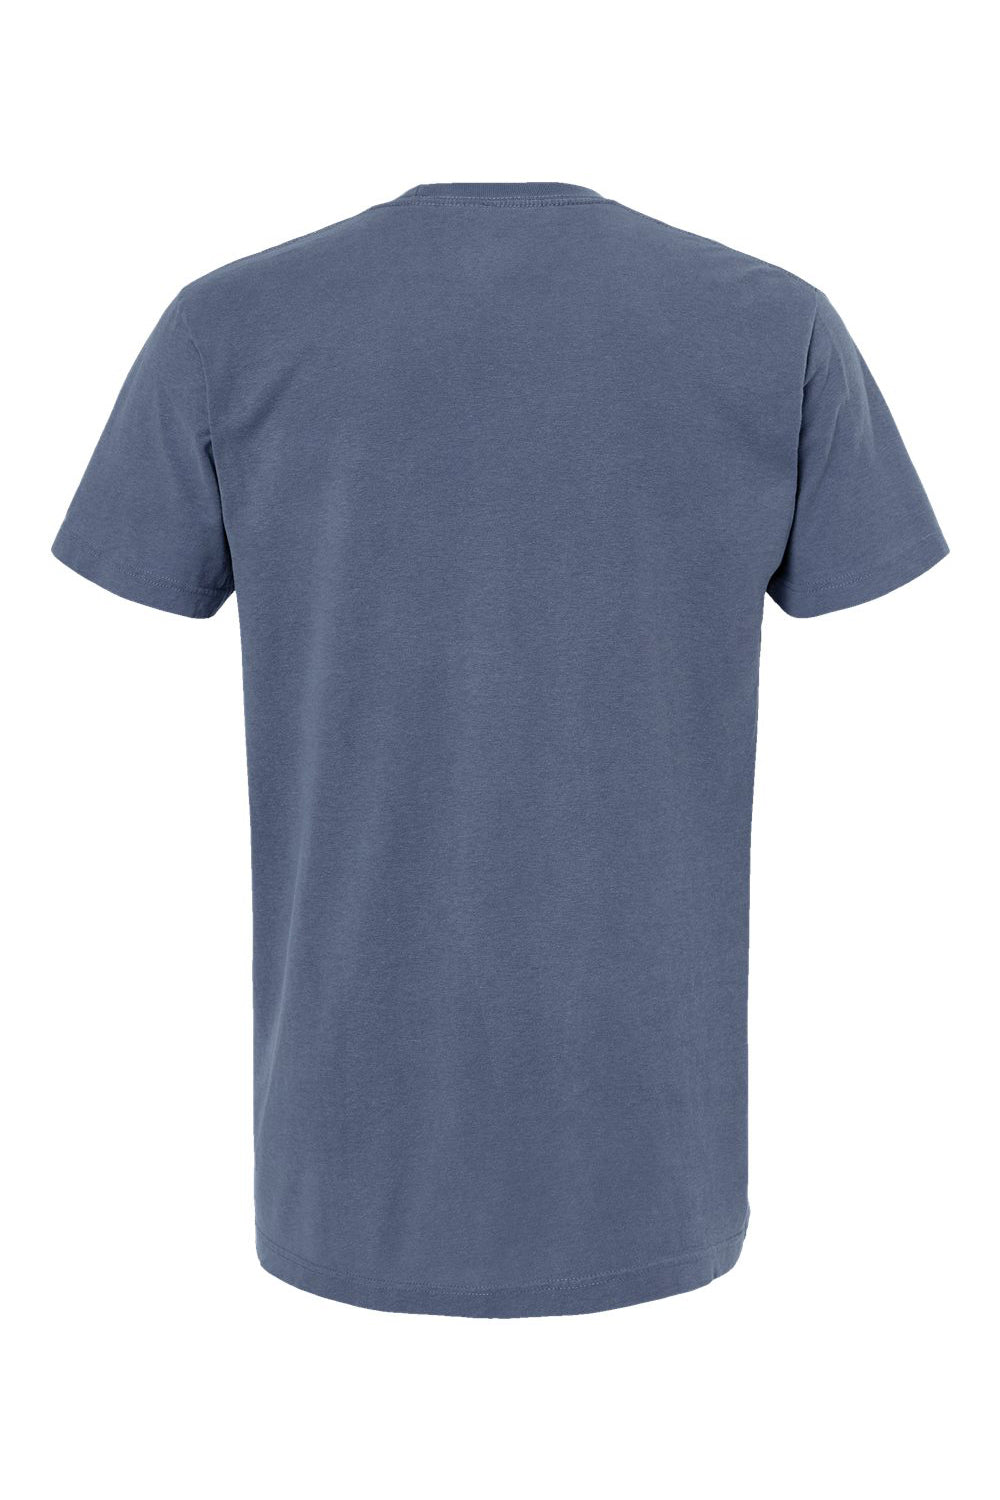 M&O 6500M Mens Vintage Garment Dyed Short Sleeve Crewneck T-Shirt Blue Jean Flat Back